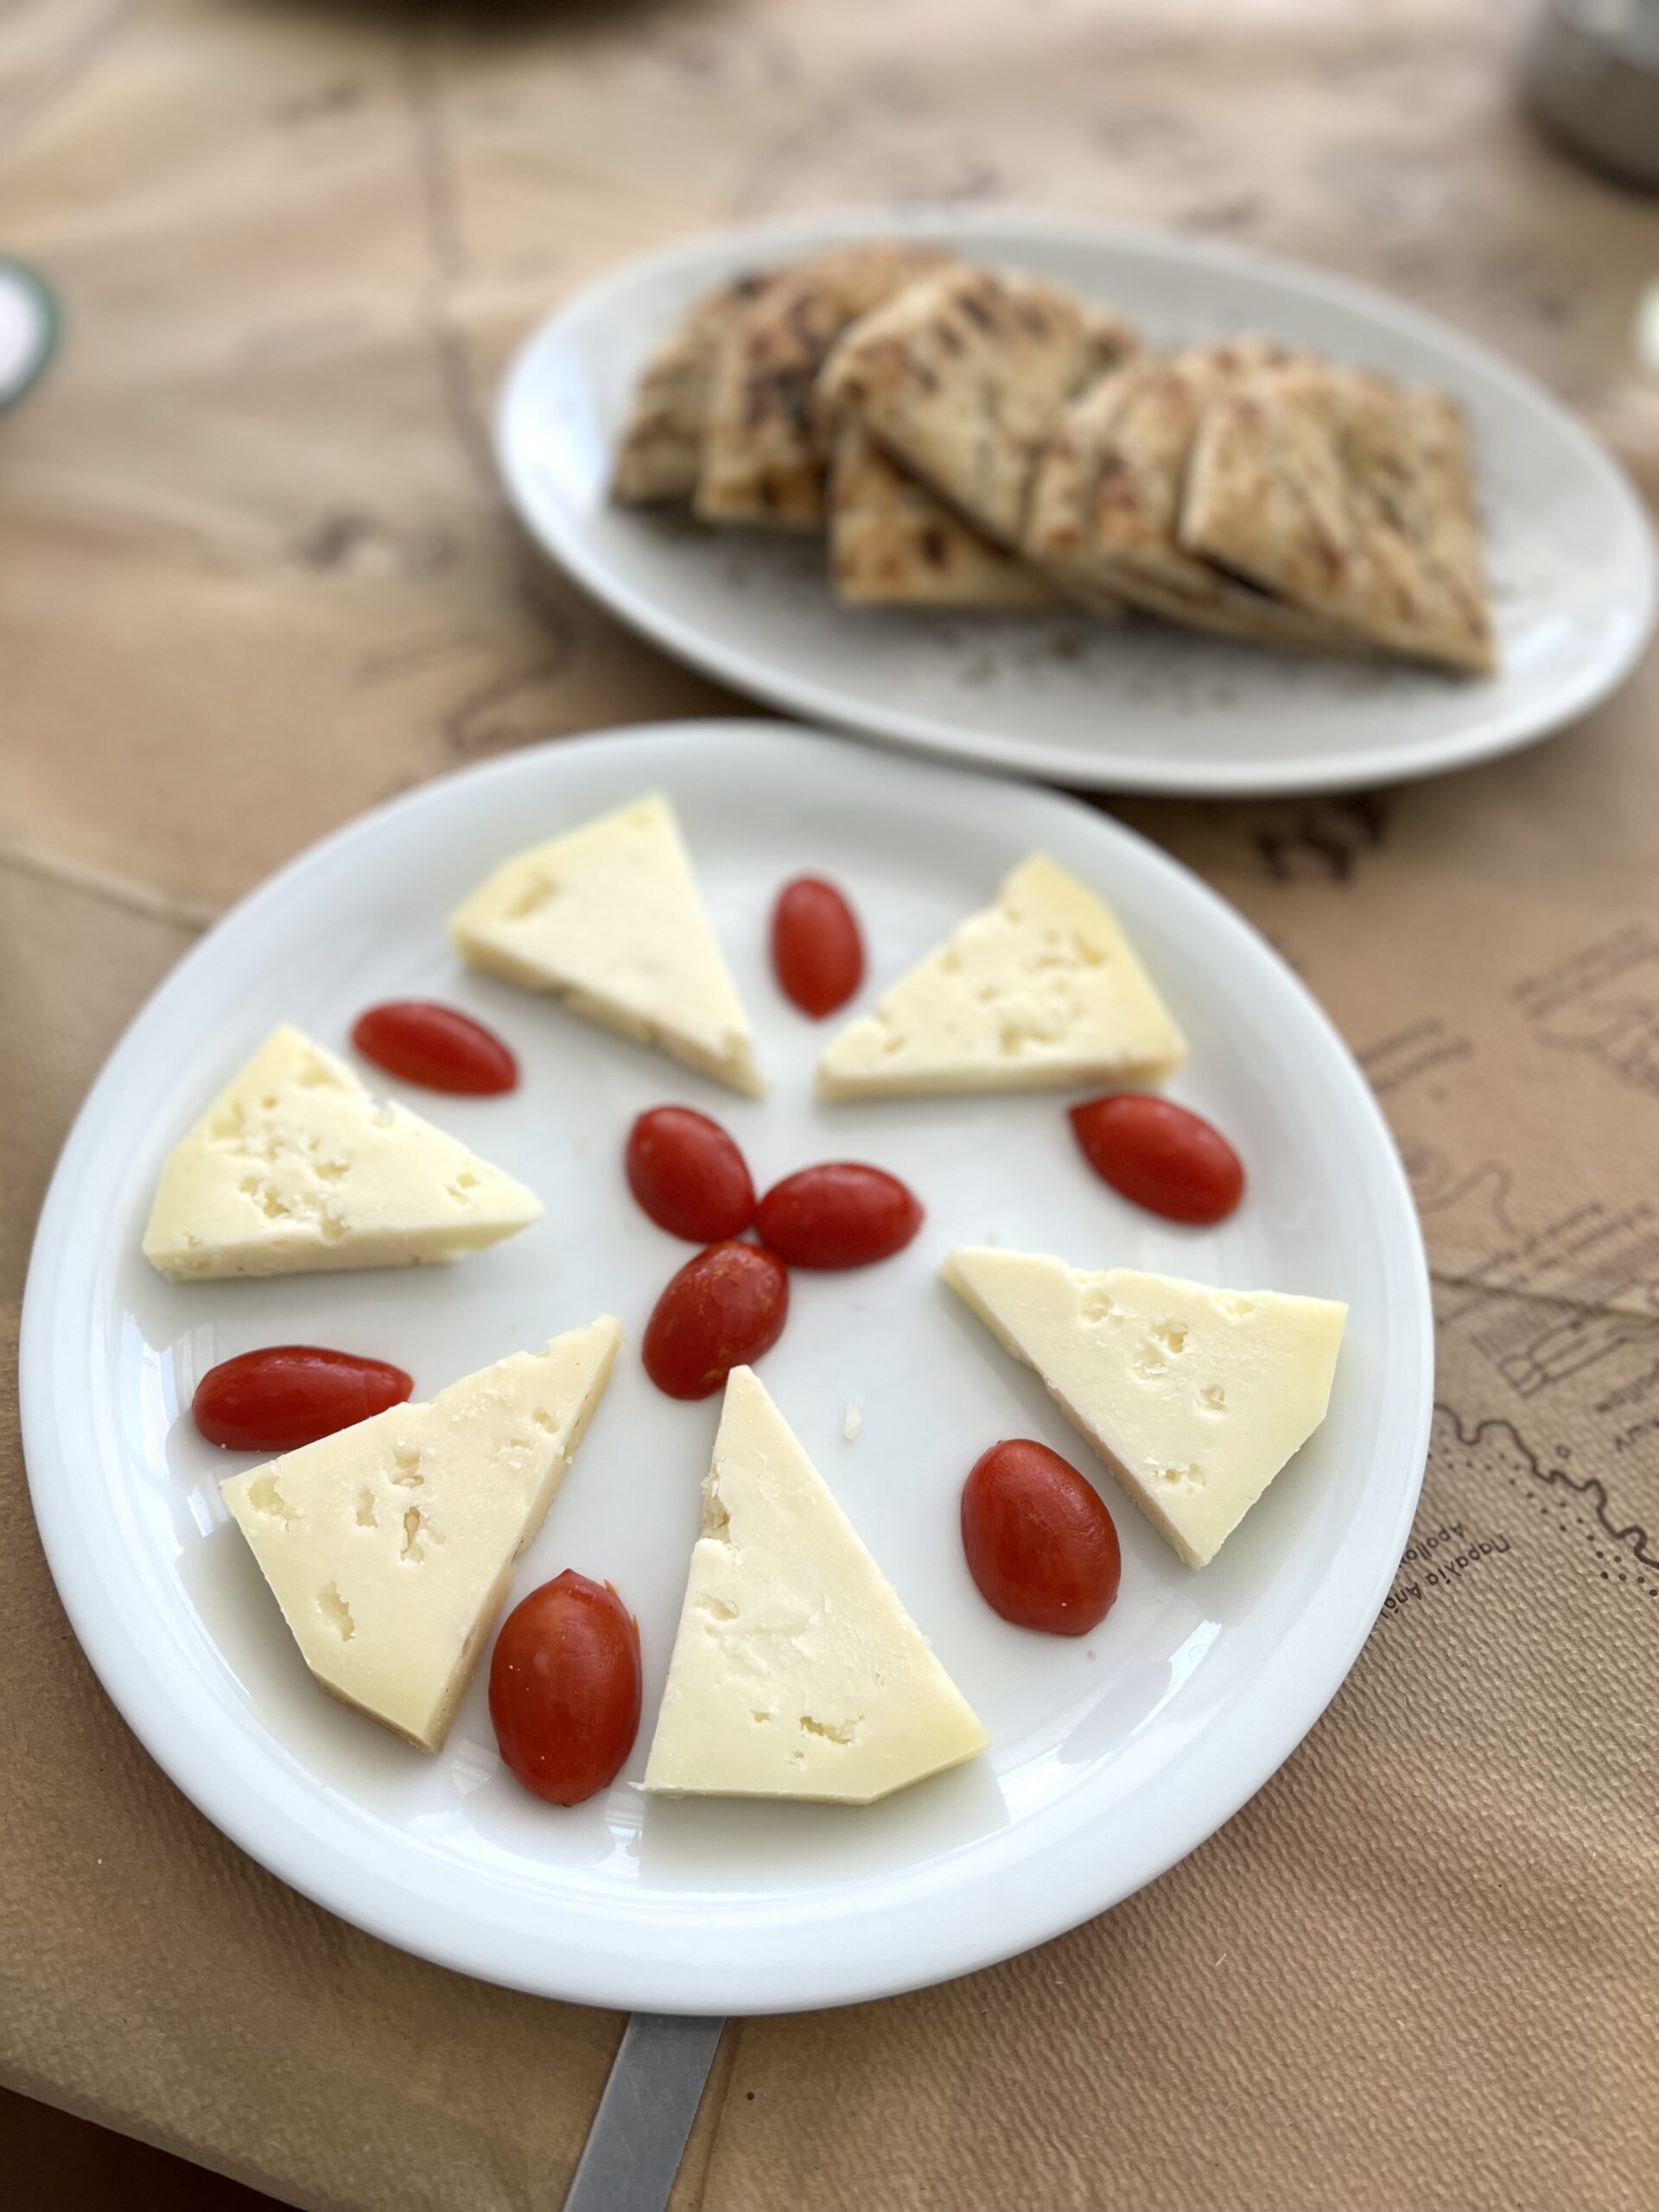 Cheese in Greece on the MediterraneanDiet